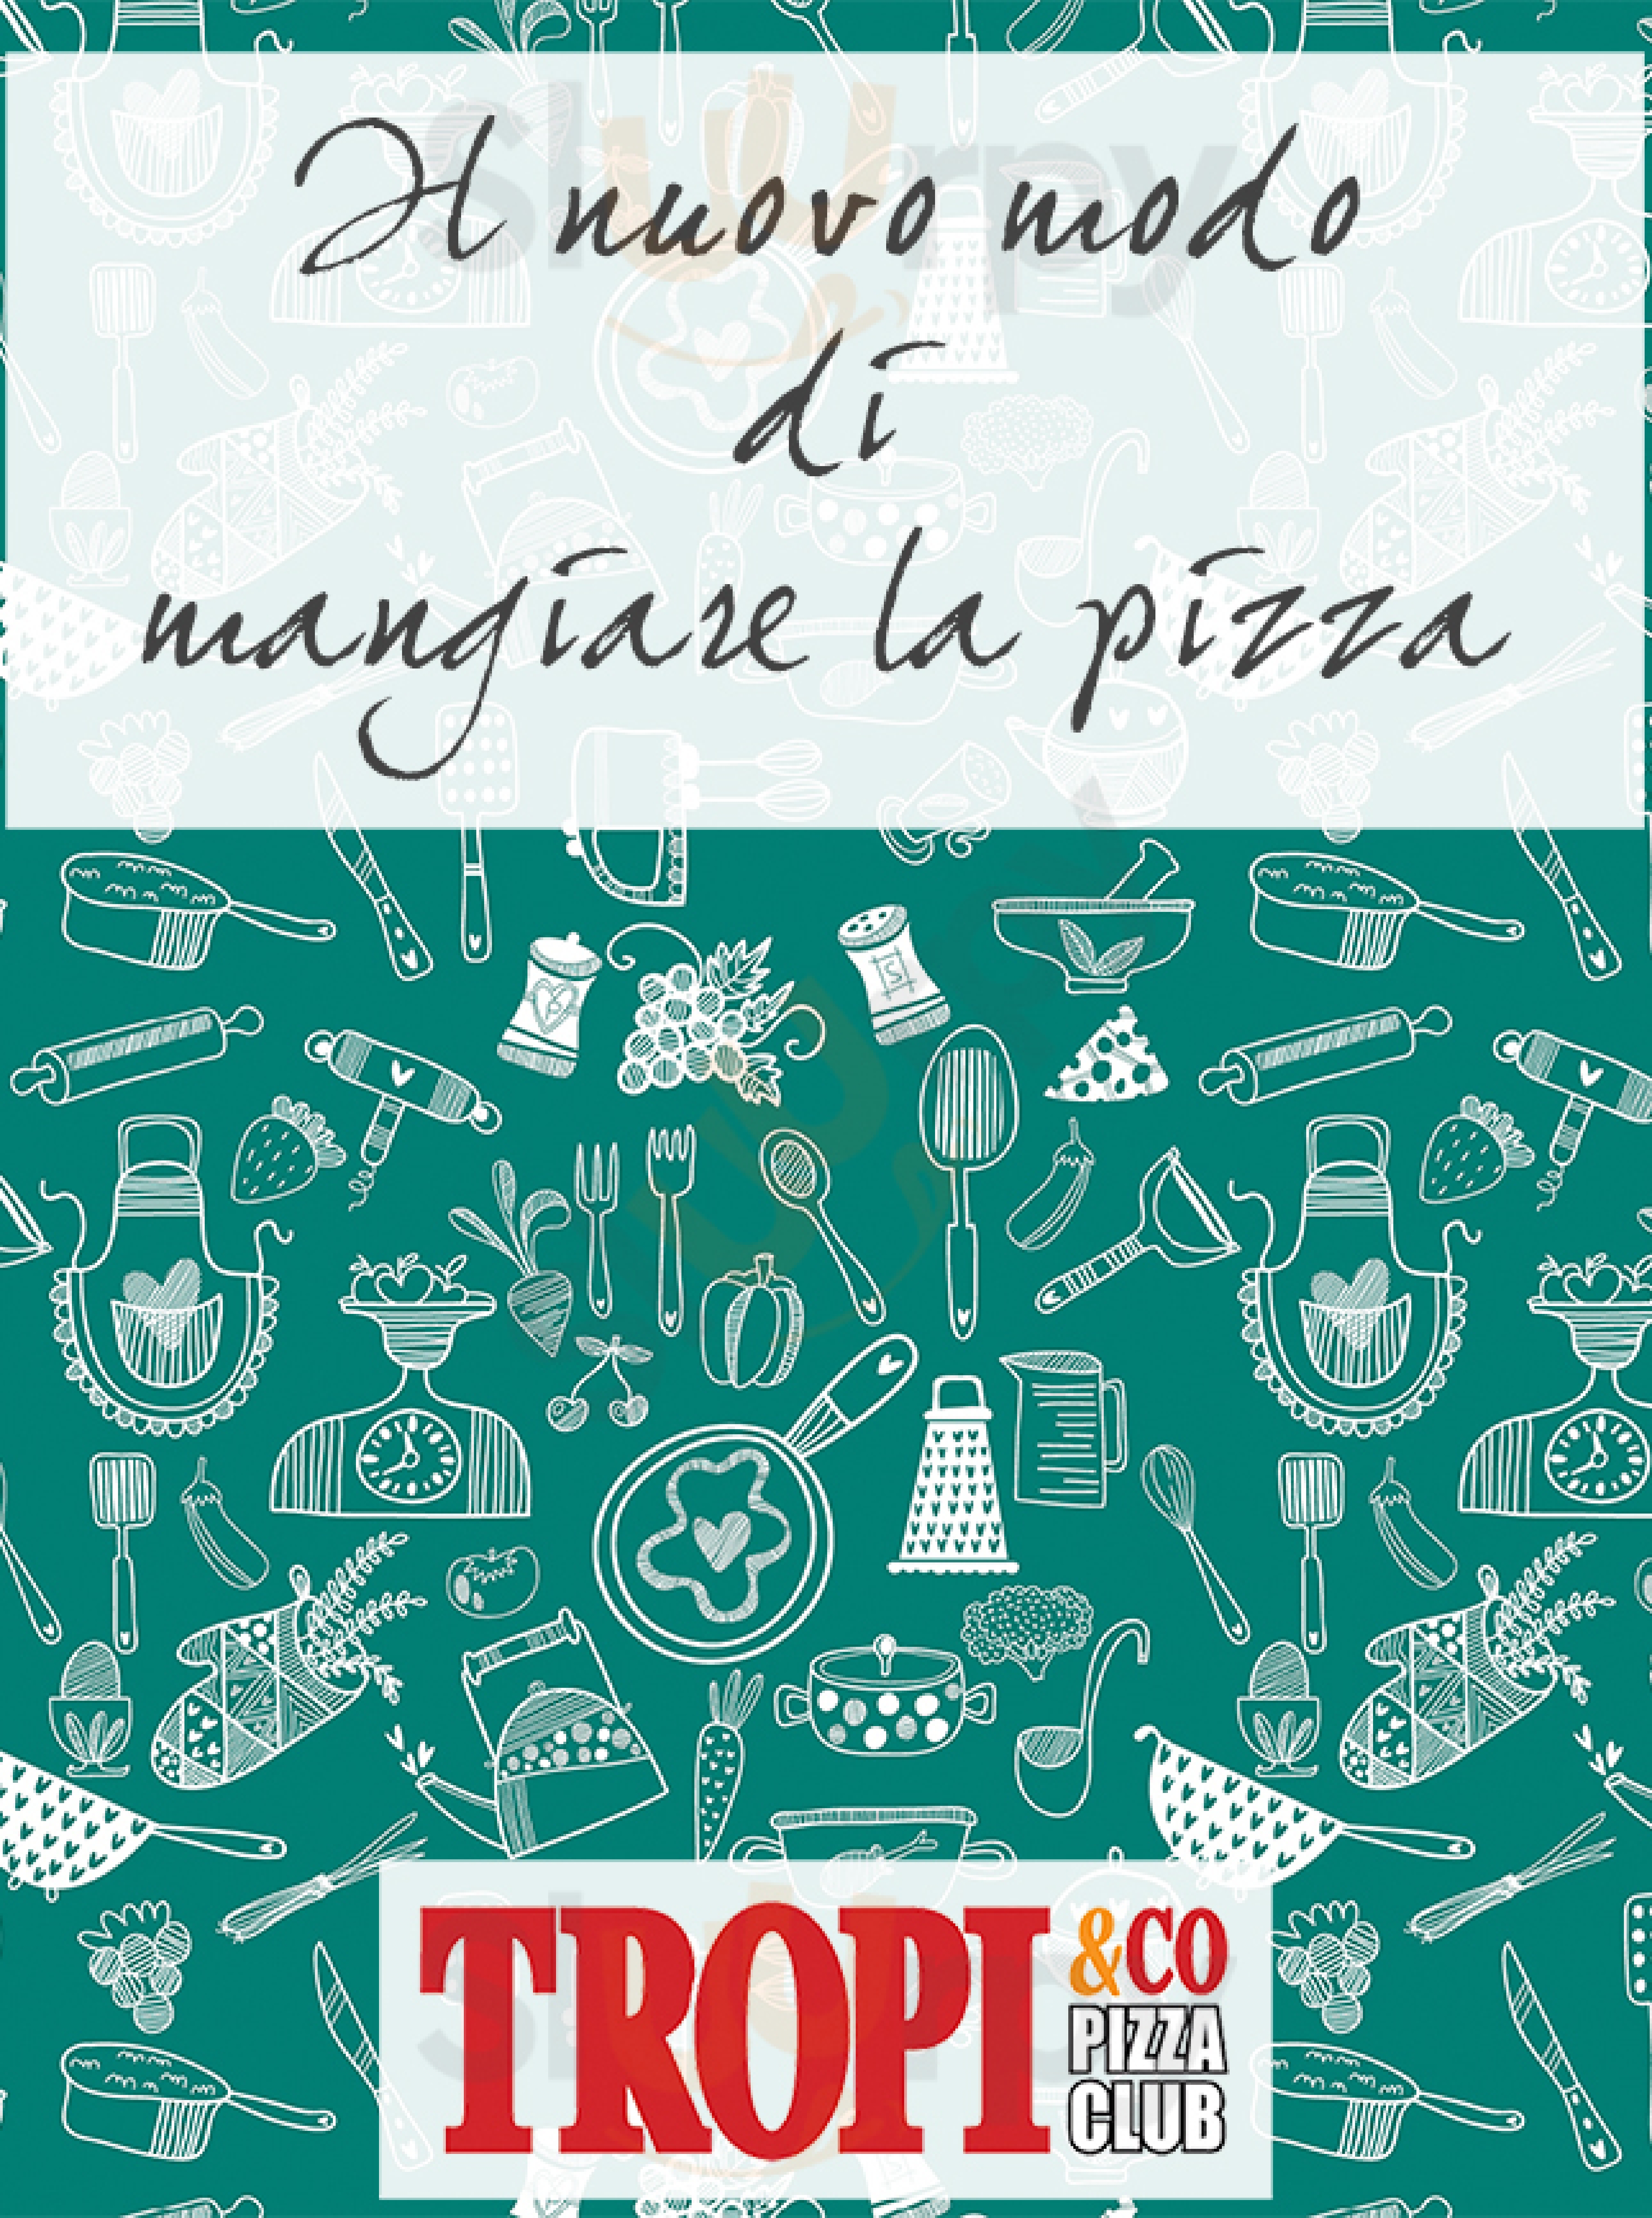 Tropi&Co Pizza Club Torino Torino menù 1 pagina